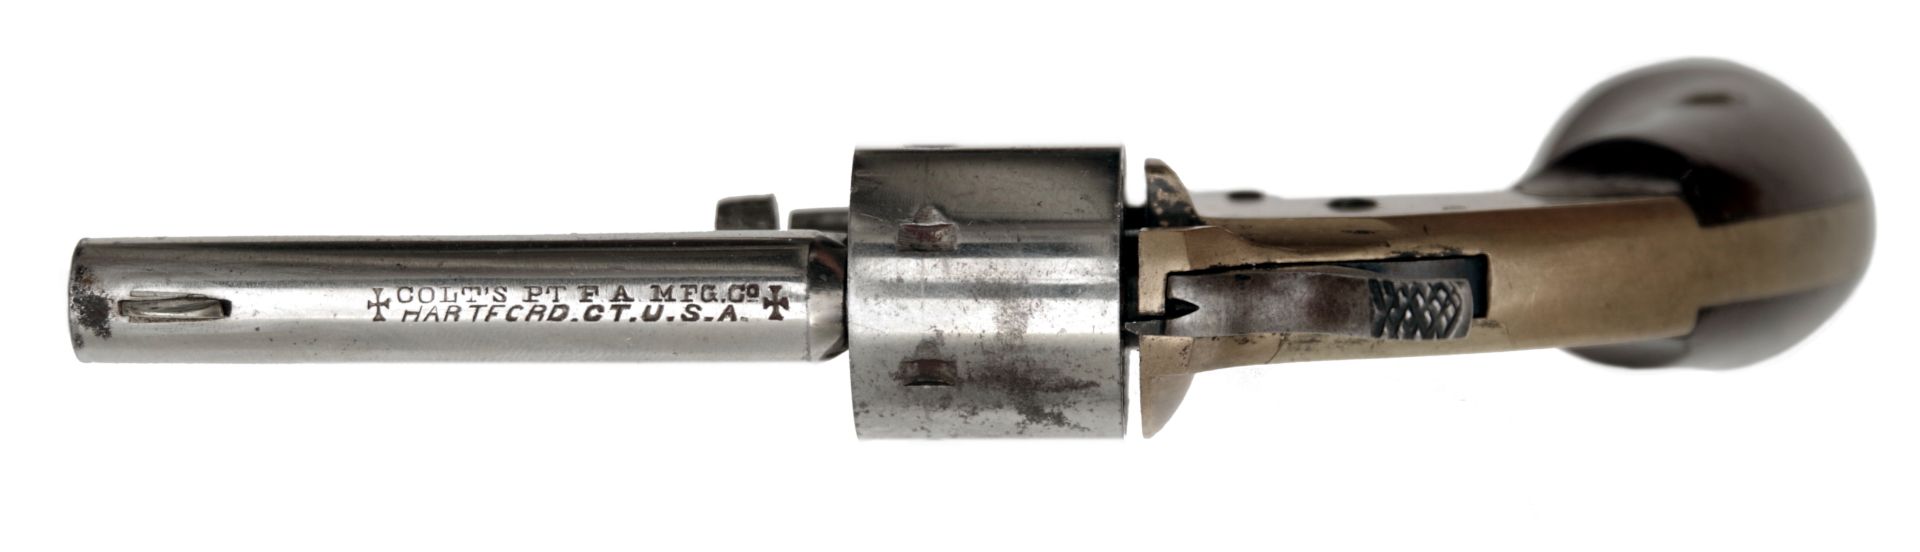 A Colt Open Top Pocket Model Revolver - Image 3 of 3